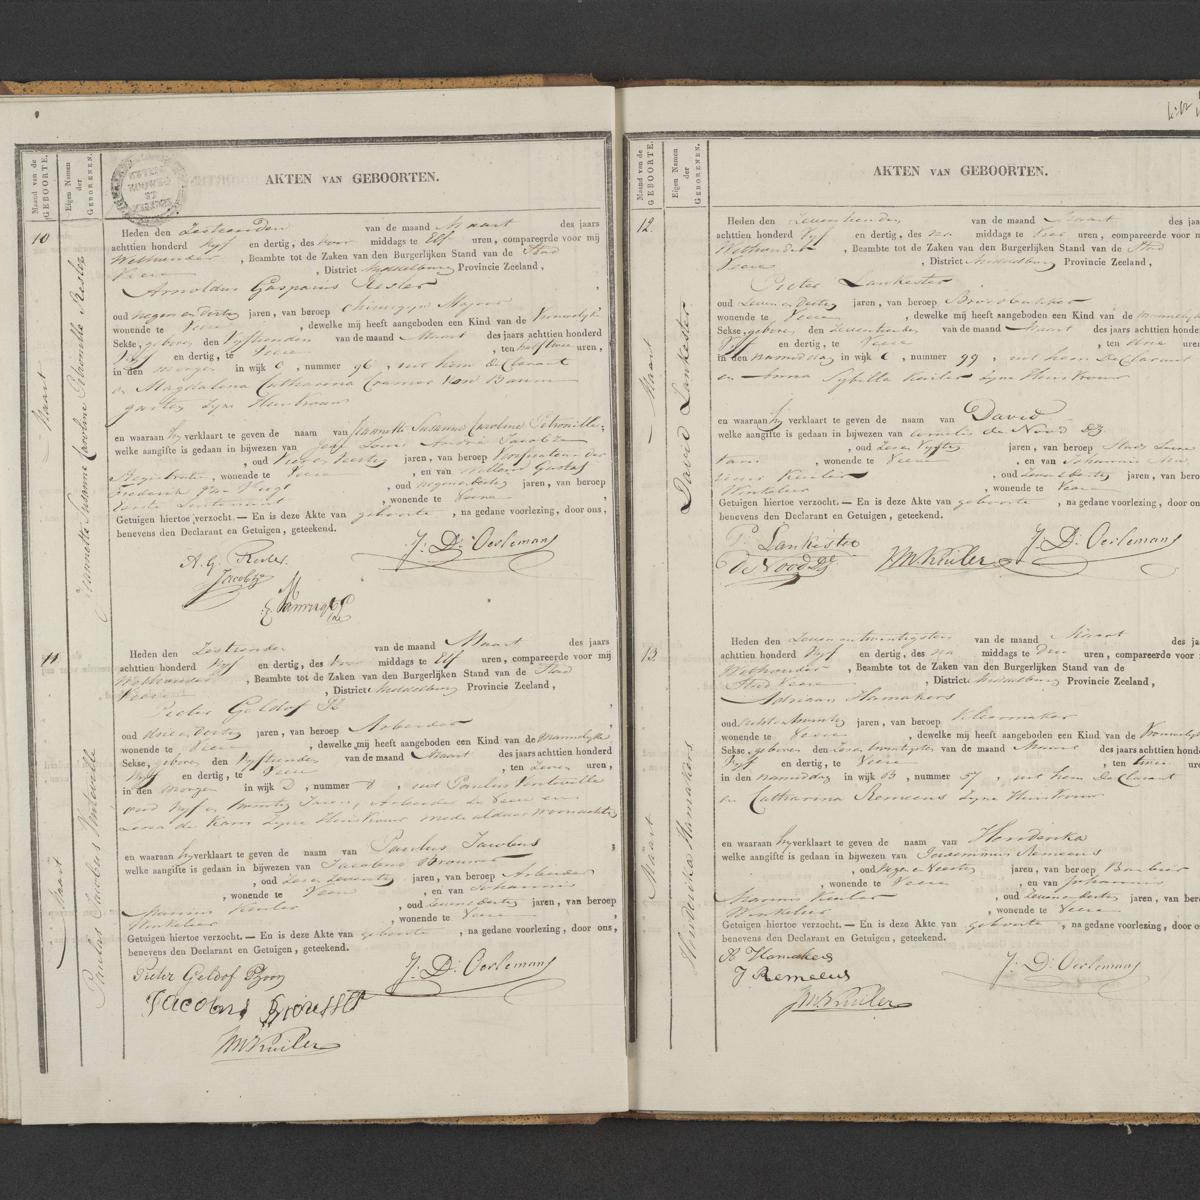 Civil registry of births, Veere, 1835, records 10-13